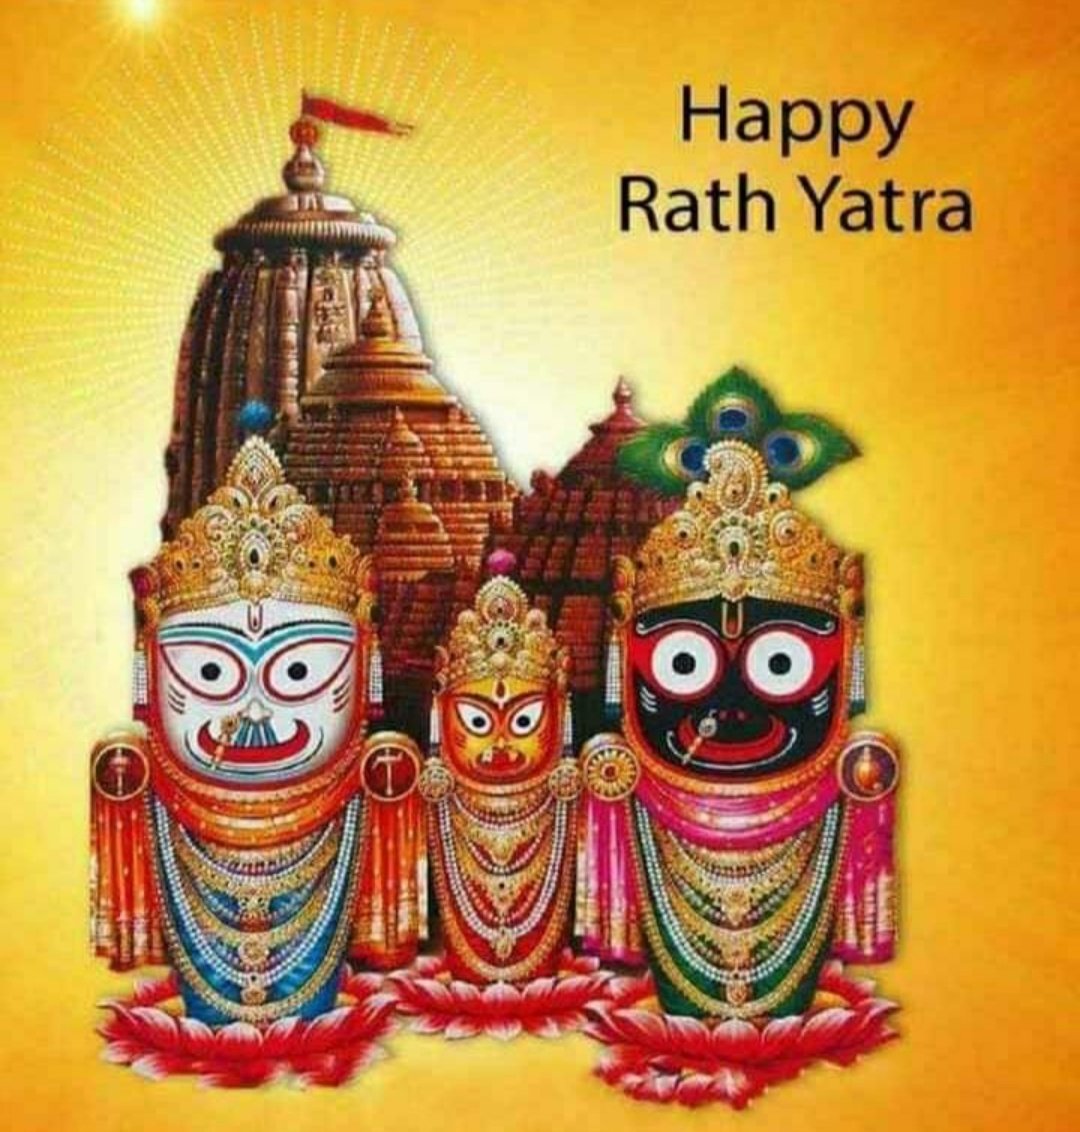 #JagannathRathYatra  #happyrathyatra2020 
🙏🙏🙏🙏🙏🙏🙏